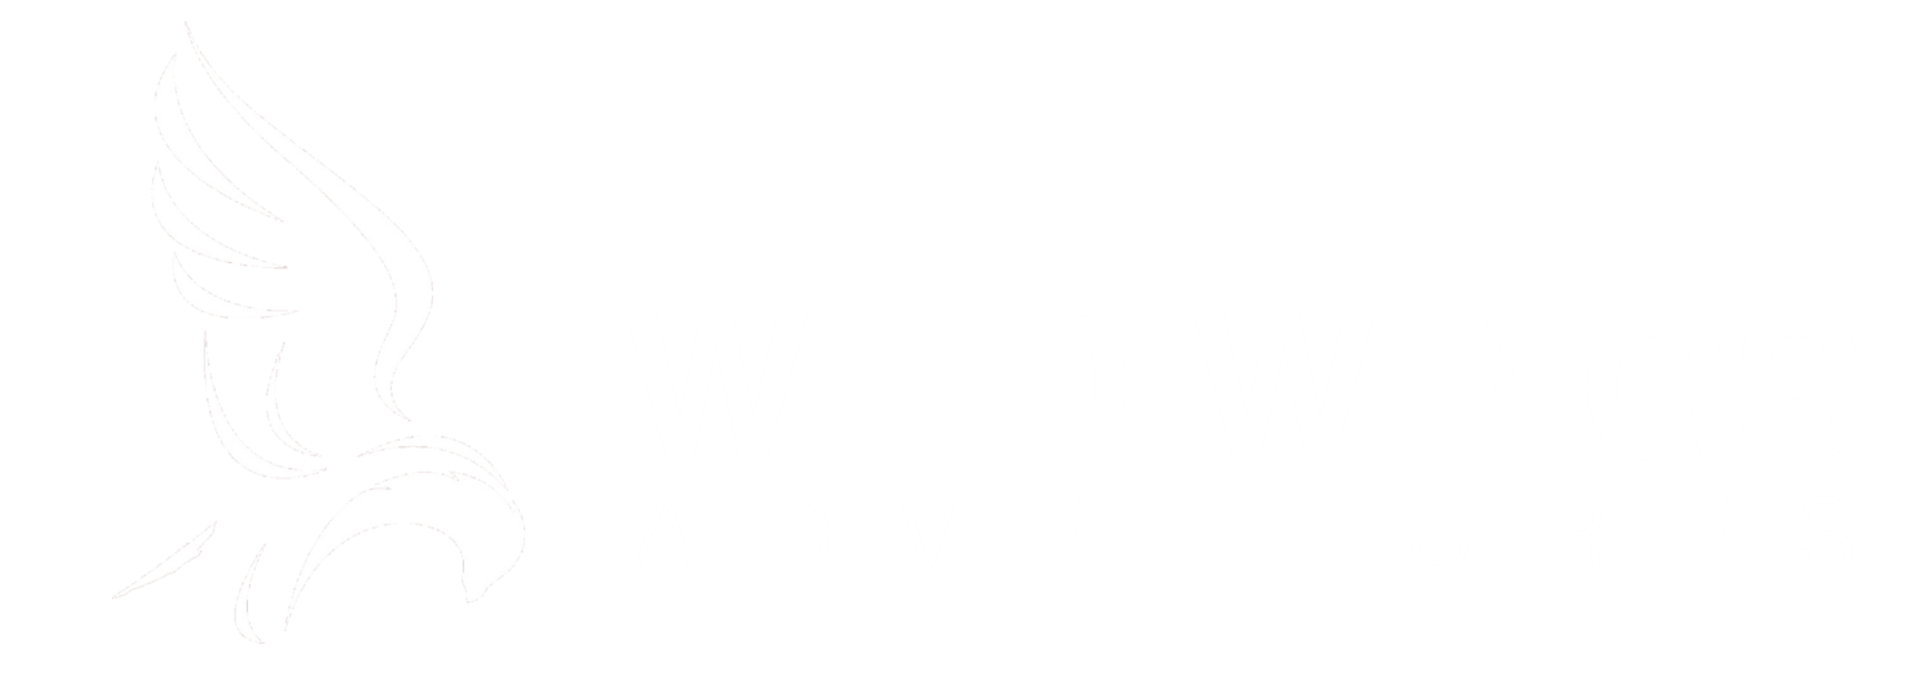 Wild Wings Adventure